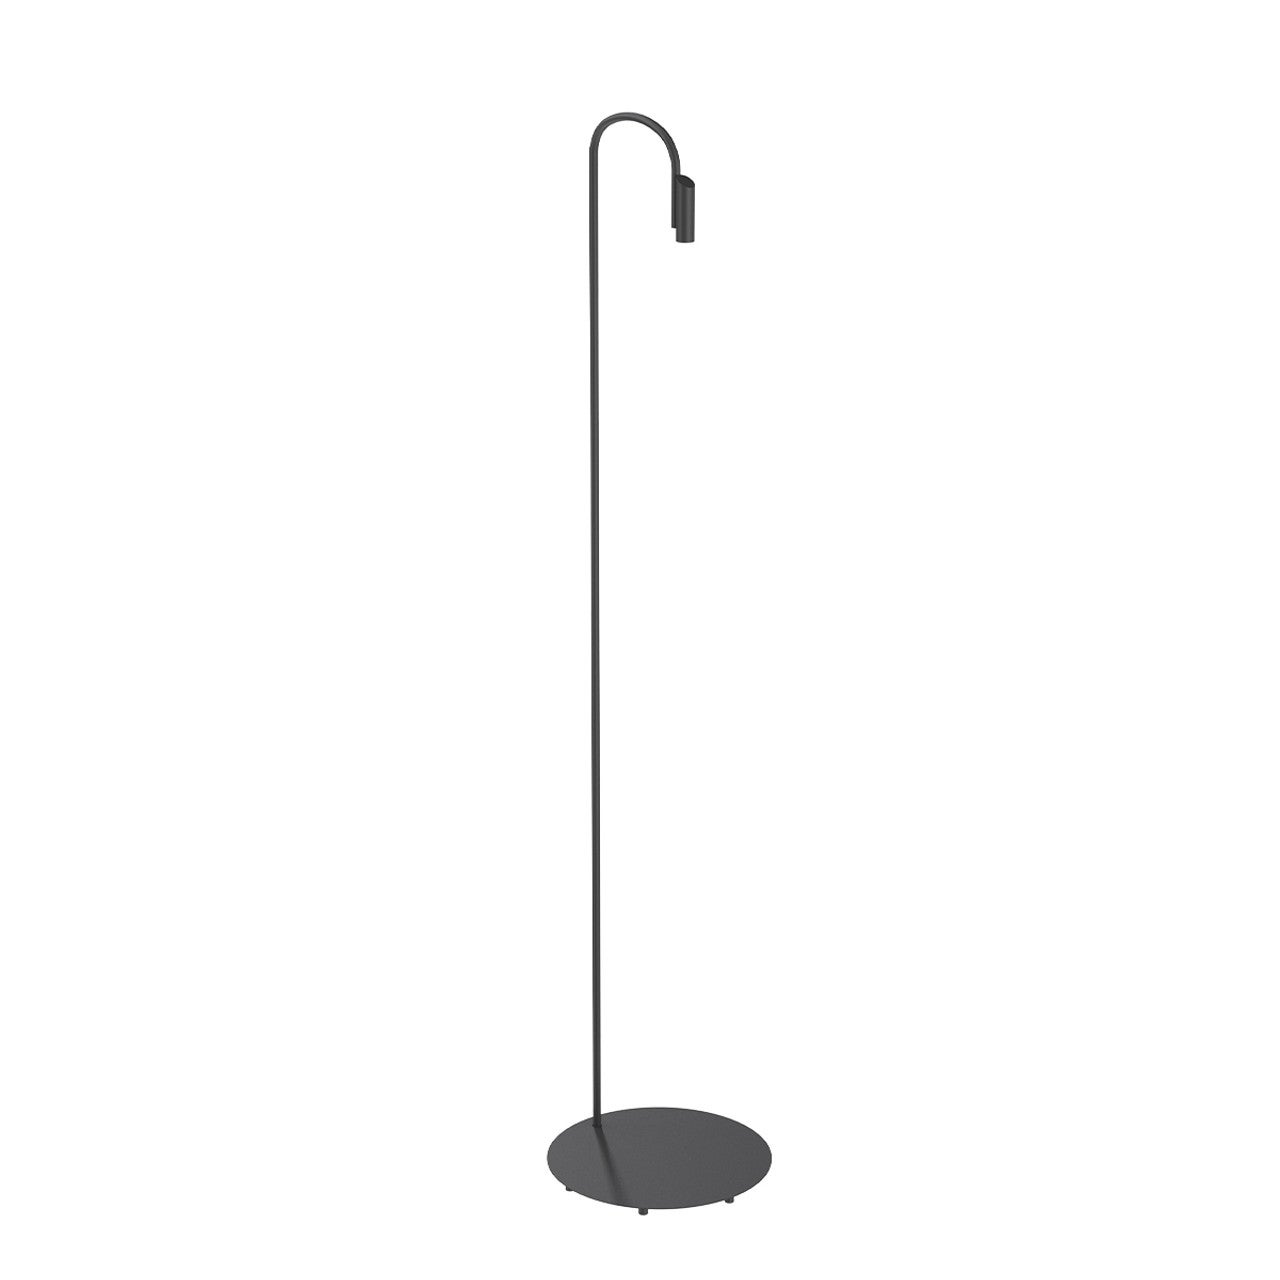 Flos Caule 2700K Model 5 Outdoor Floor Lamp in Deep Brown with Regular Shade